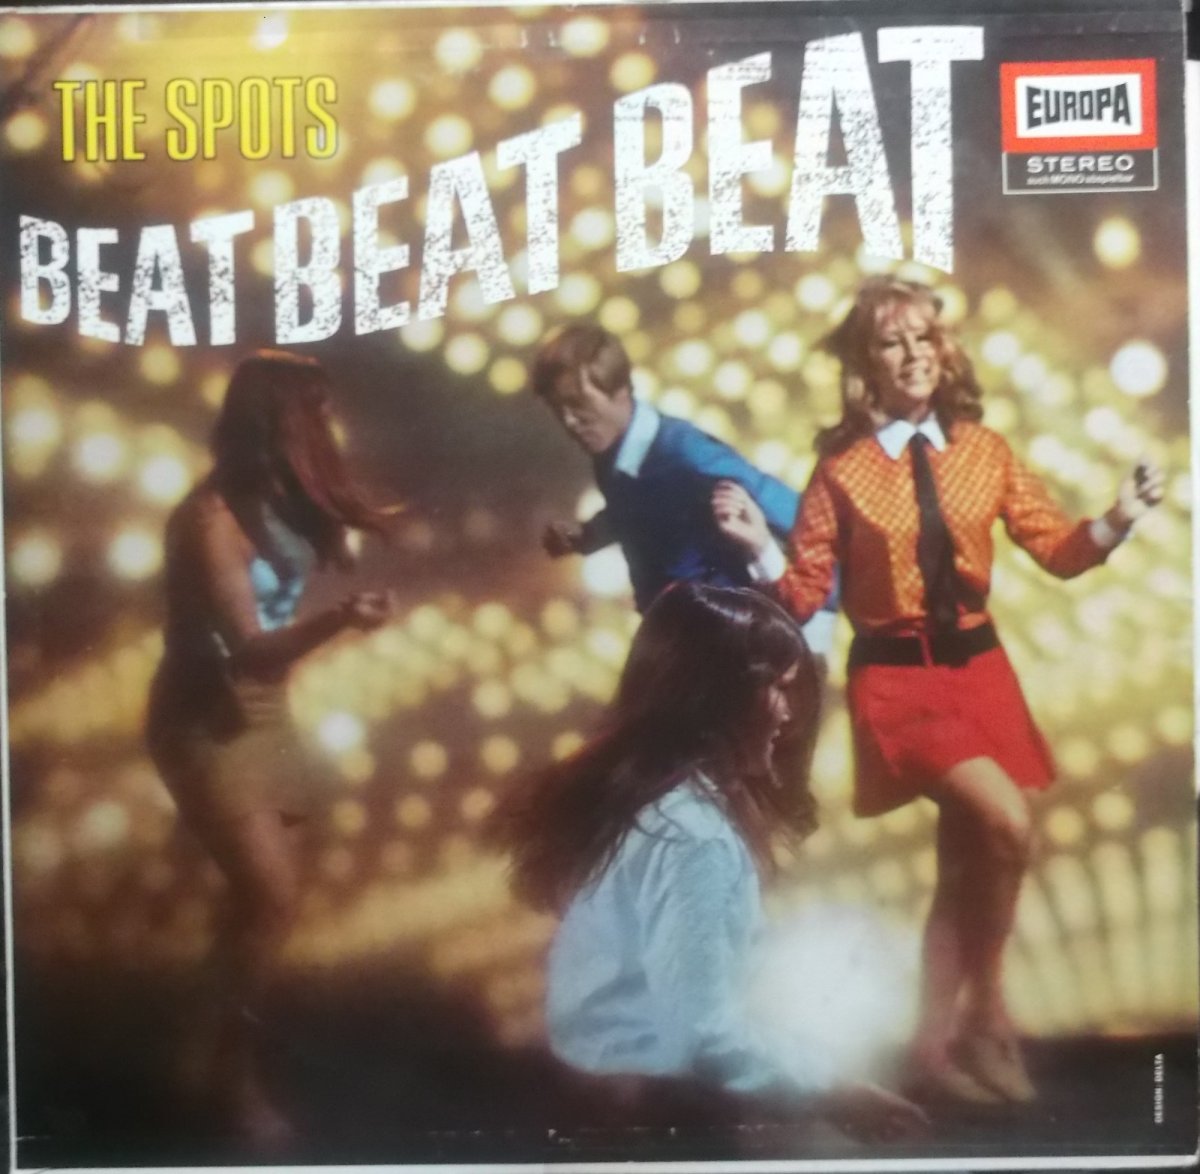 The Spots – Beat Beat Beat